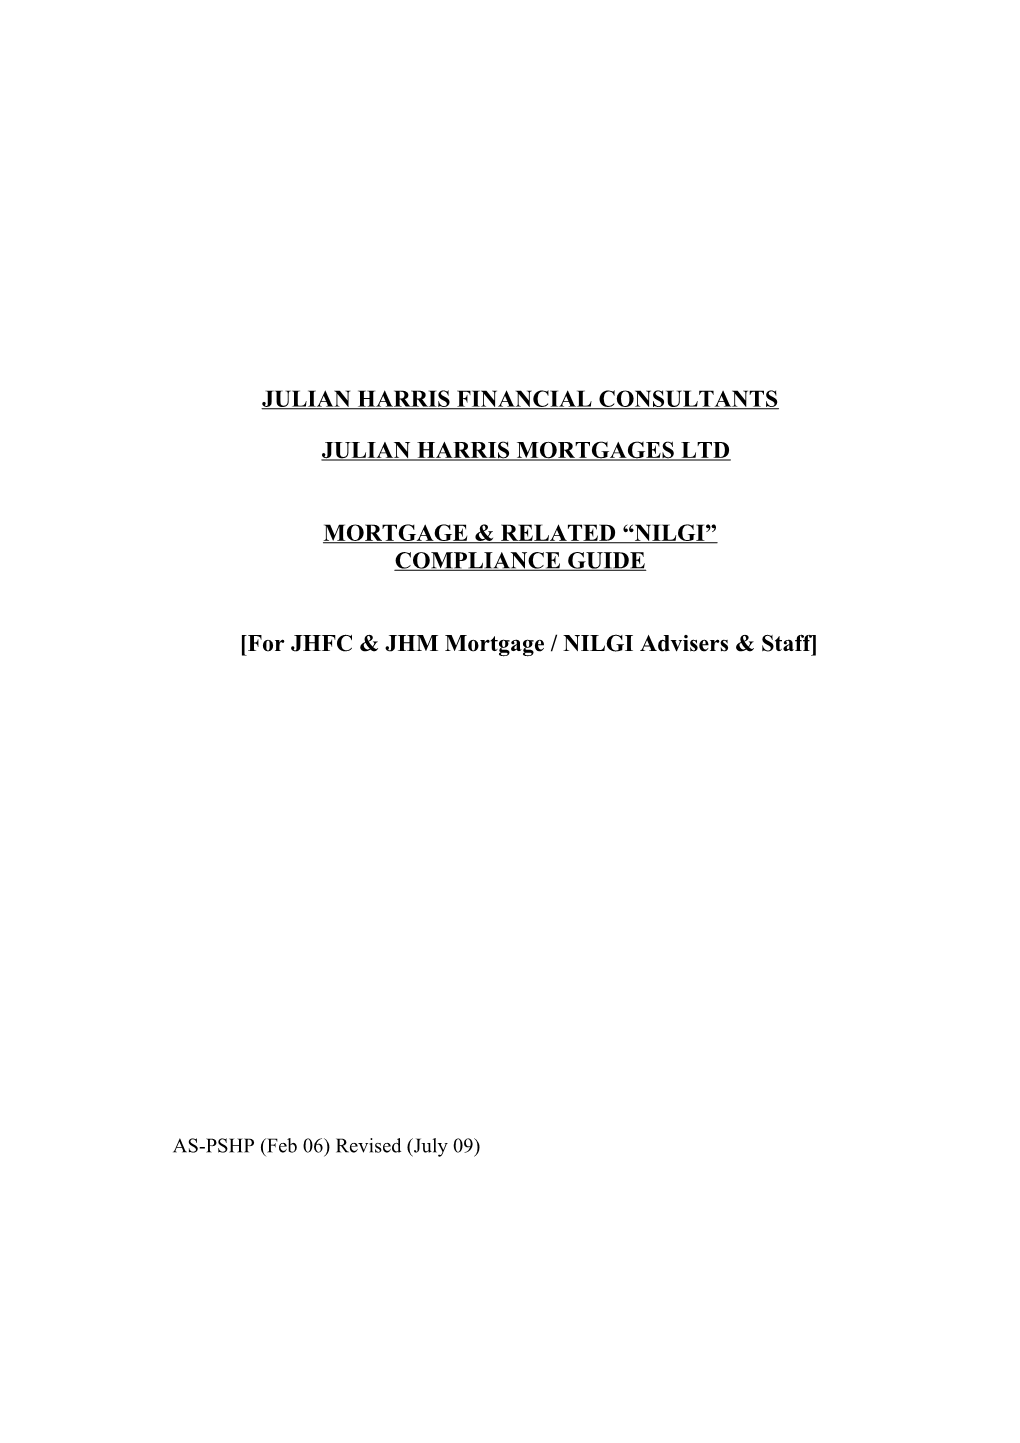 Julian Harris Financial Consultants s1